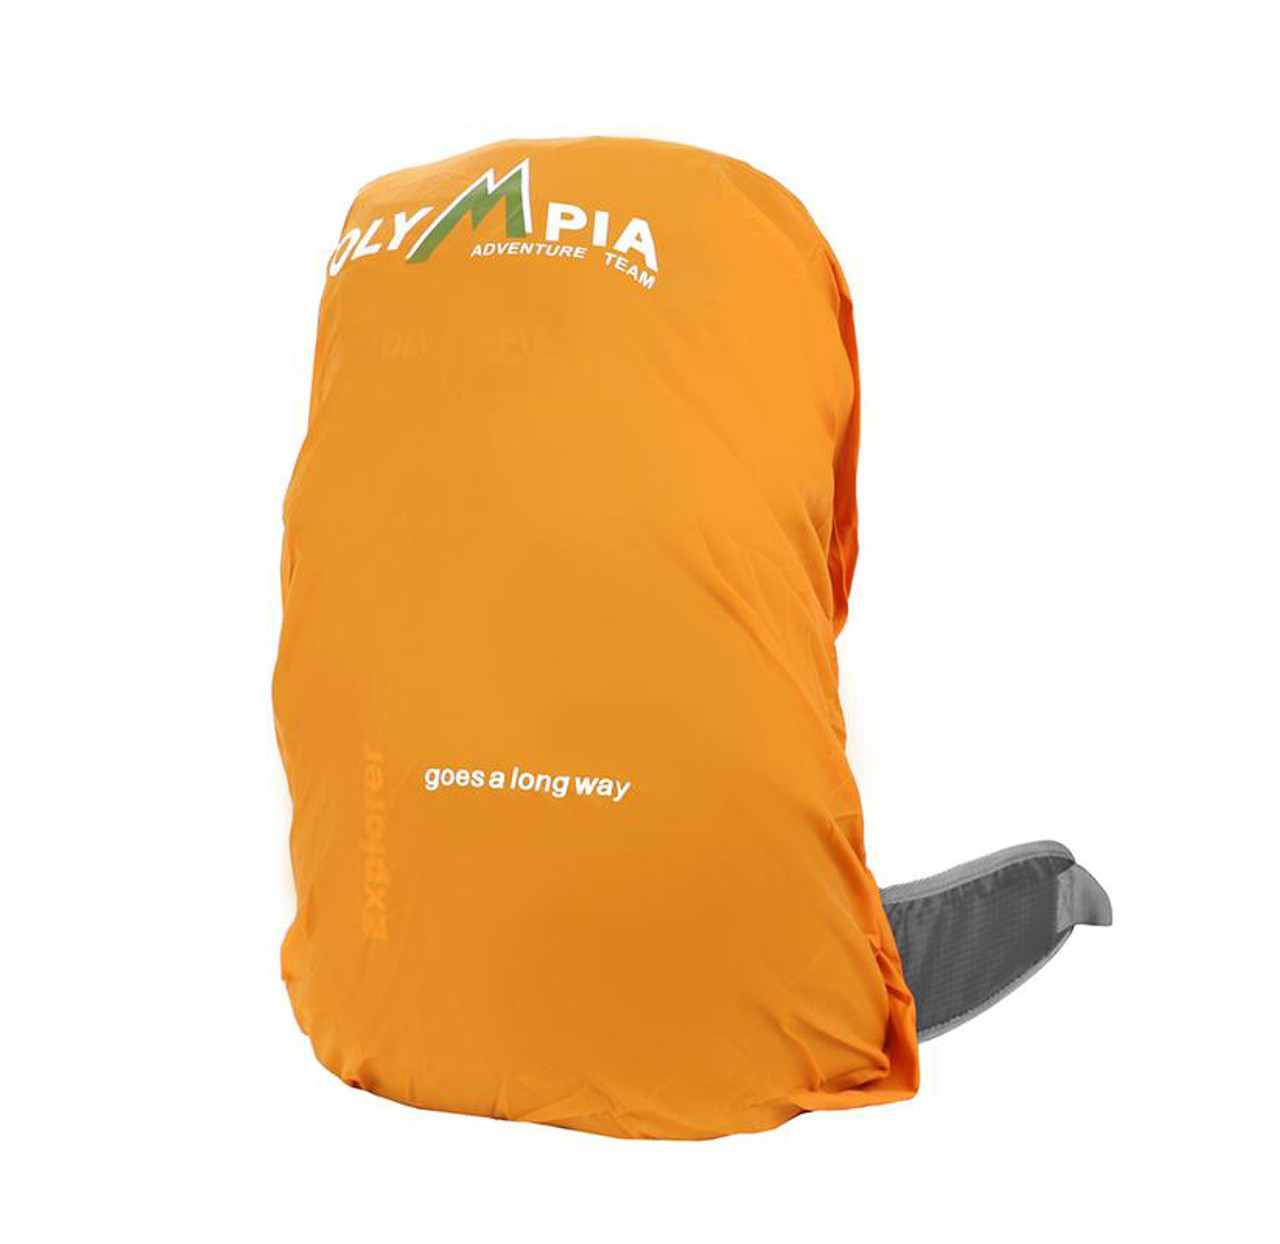 Olympia USA Explorer 20" Hiking Backpack product image